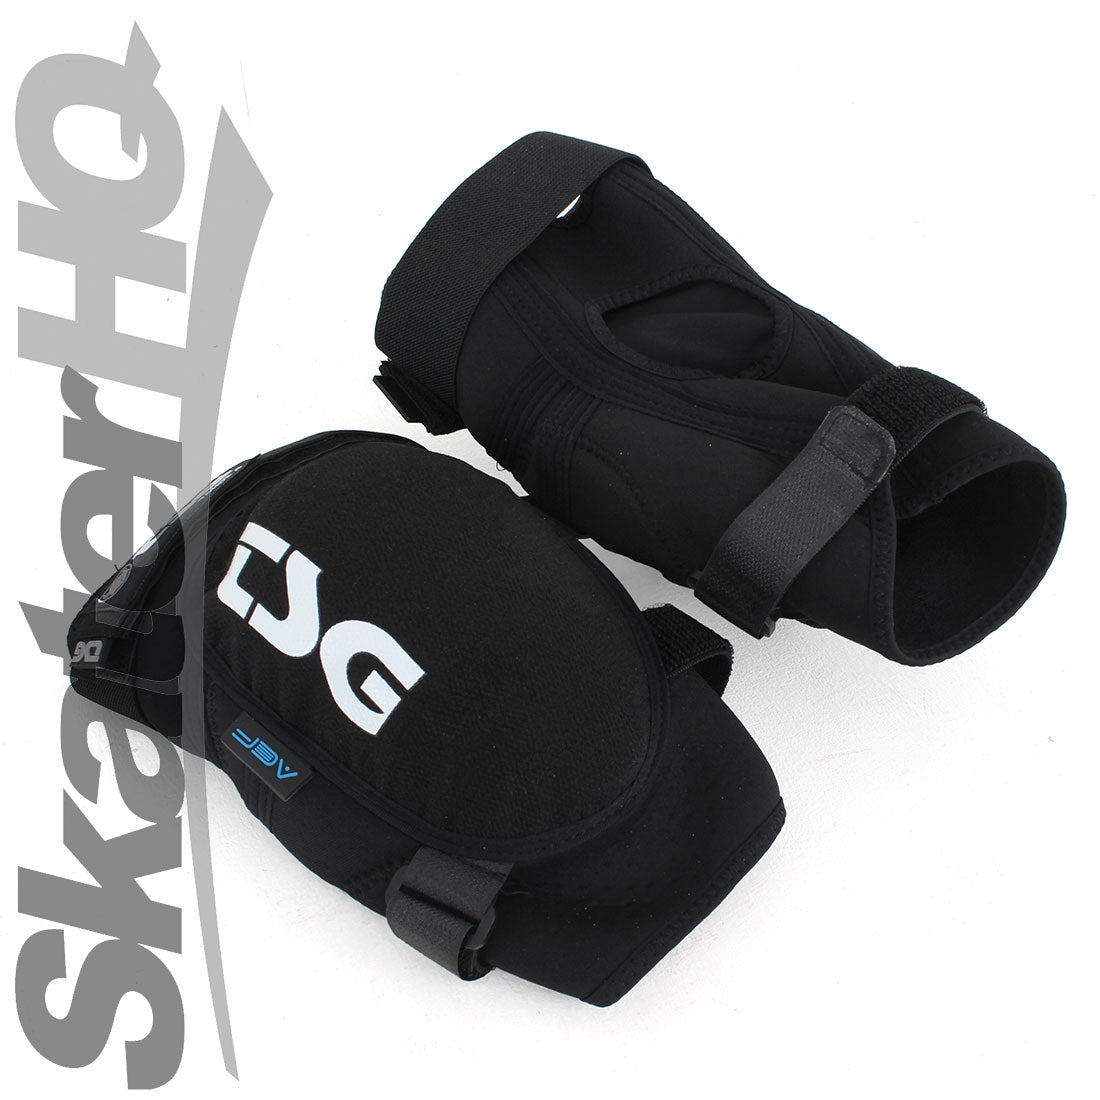 TSG Tahoe Arti-Lage Kneeguard Black - Small Protective Gear